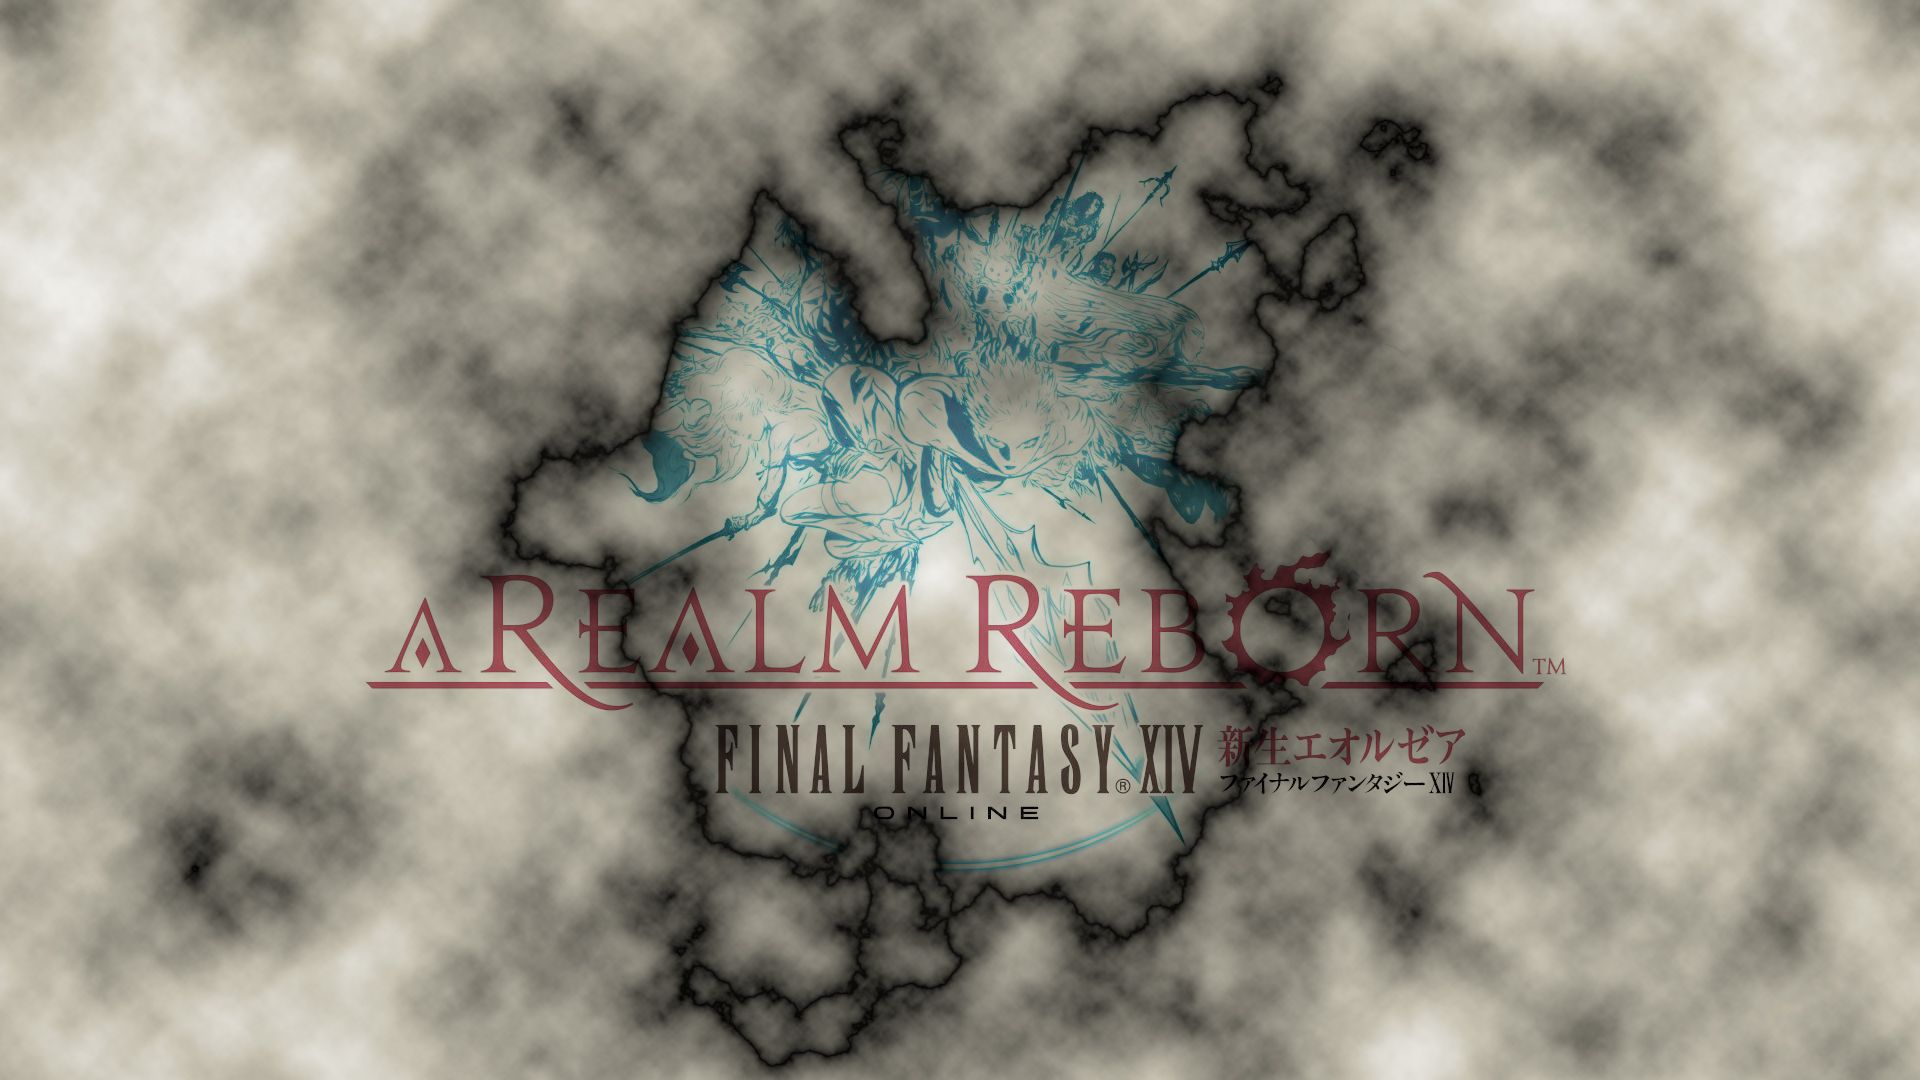 Final Fantasy XIV A Realm Reborn Wallpaper 2 by AlboQuest on ...